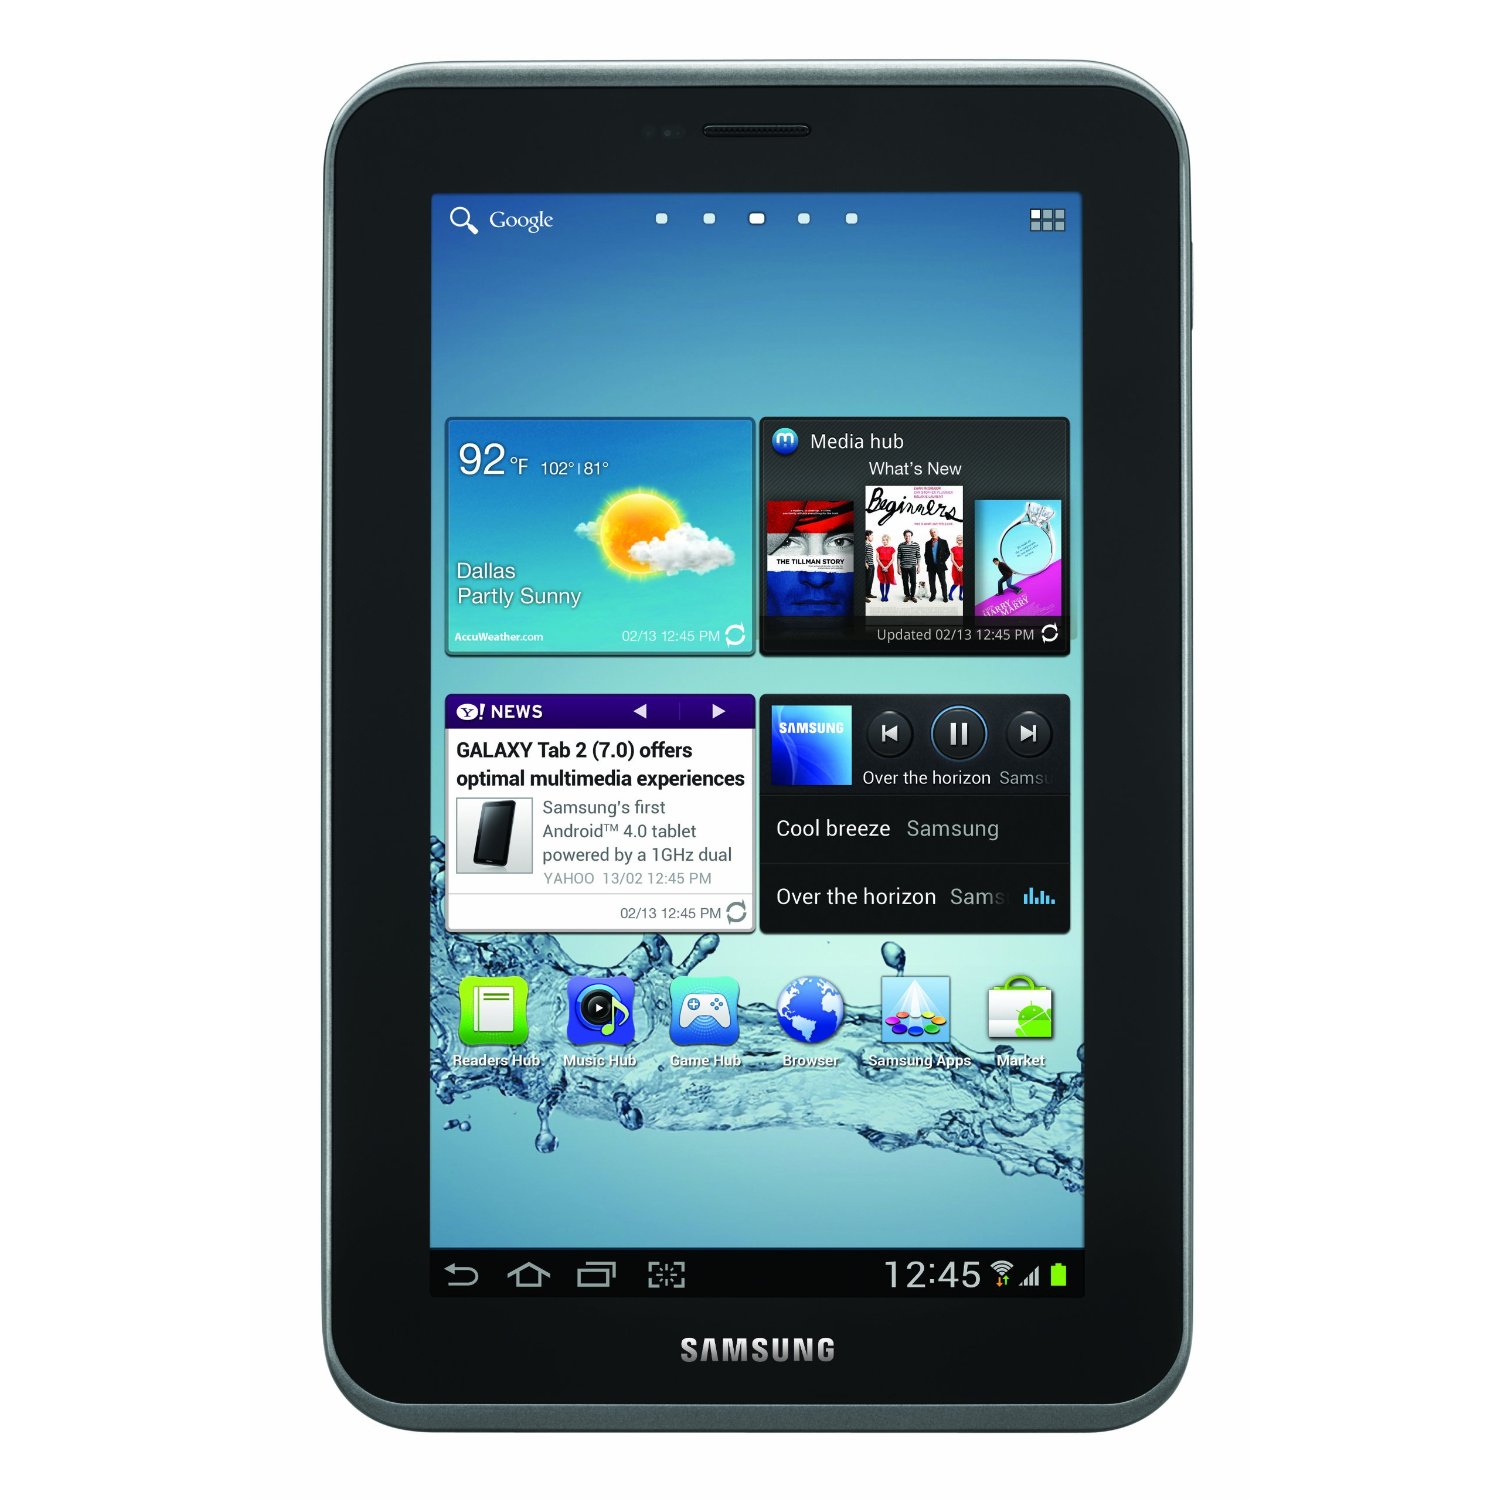 Samsung Galaxy Tab 2 7.0 GT-P3113TSYXAR Tablet - Dual Core processor, 7